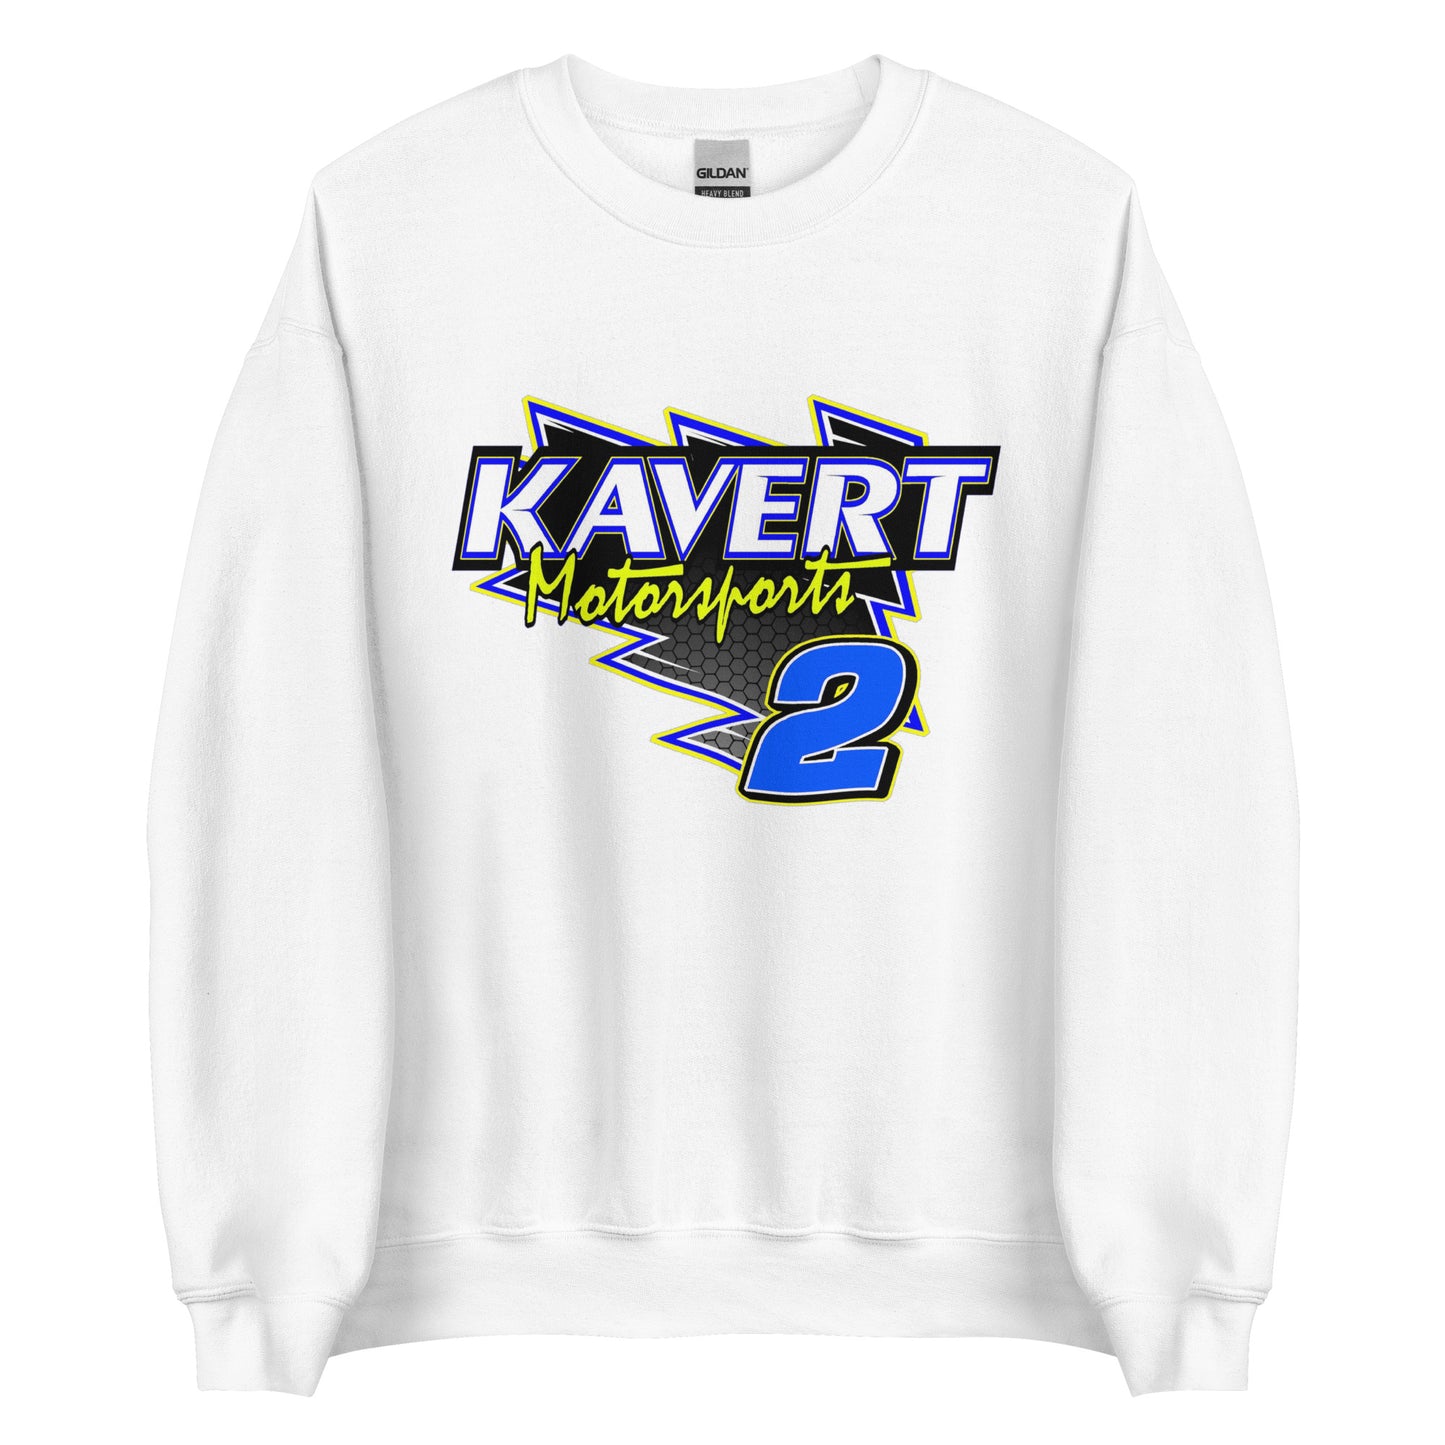 Kavert Motorsport Adult Crewneck Sweatshirt